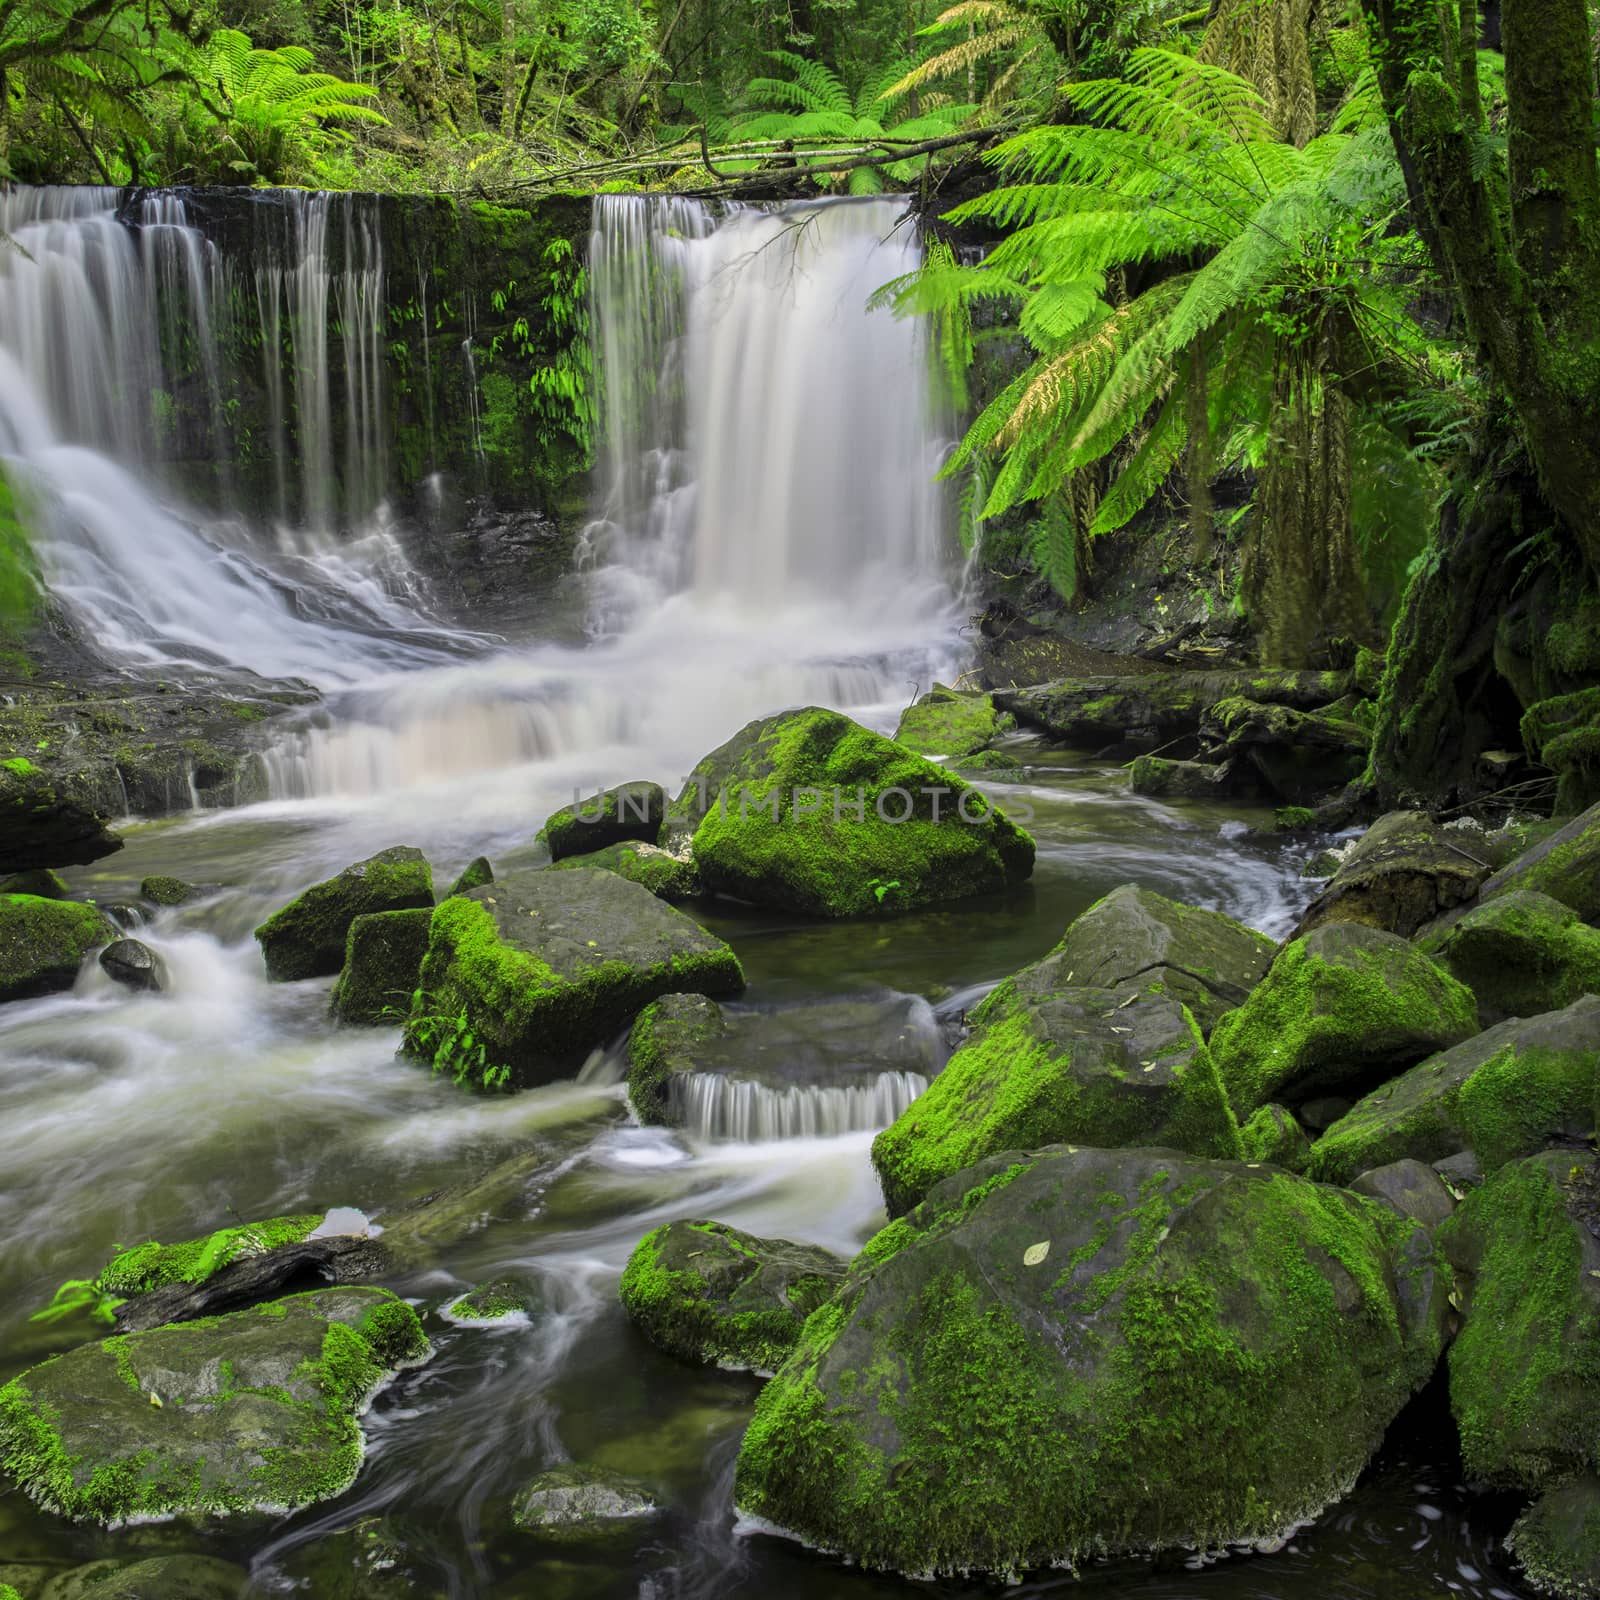 The beautiful Horseshoe Falls after heavy rain fall in Mount Field National Park, Tasmania, Australia